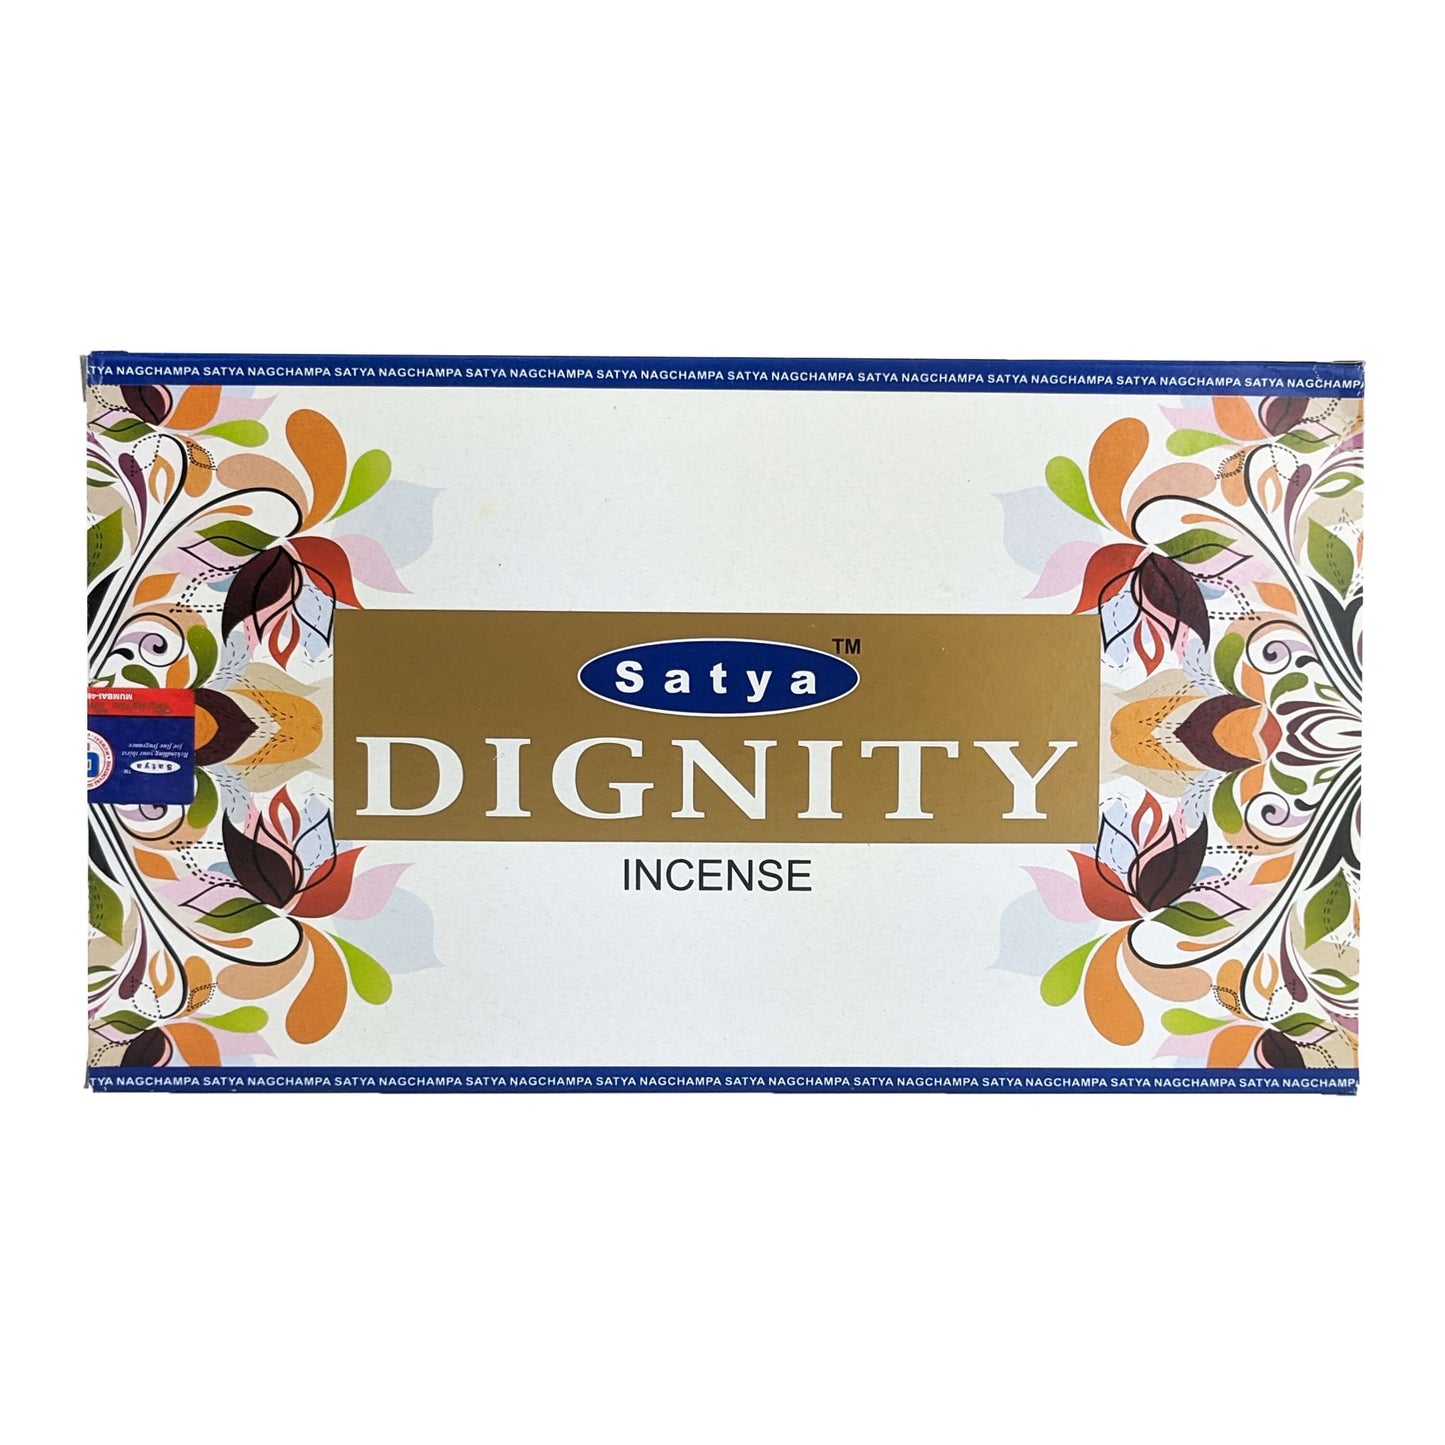 Satya Dignity Incense Sticks, 15g Pack